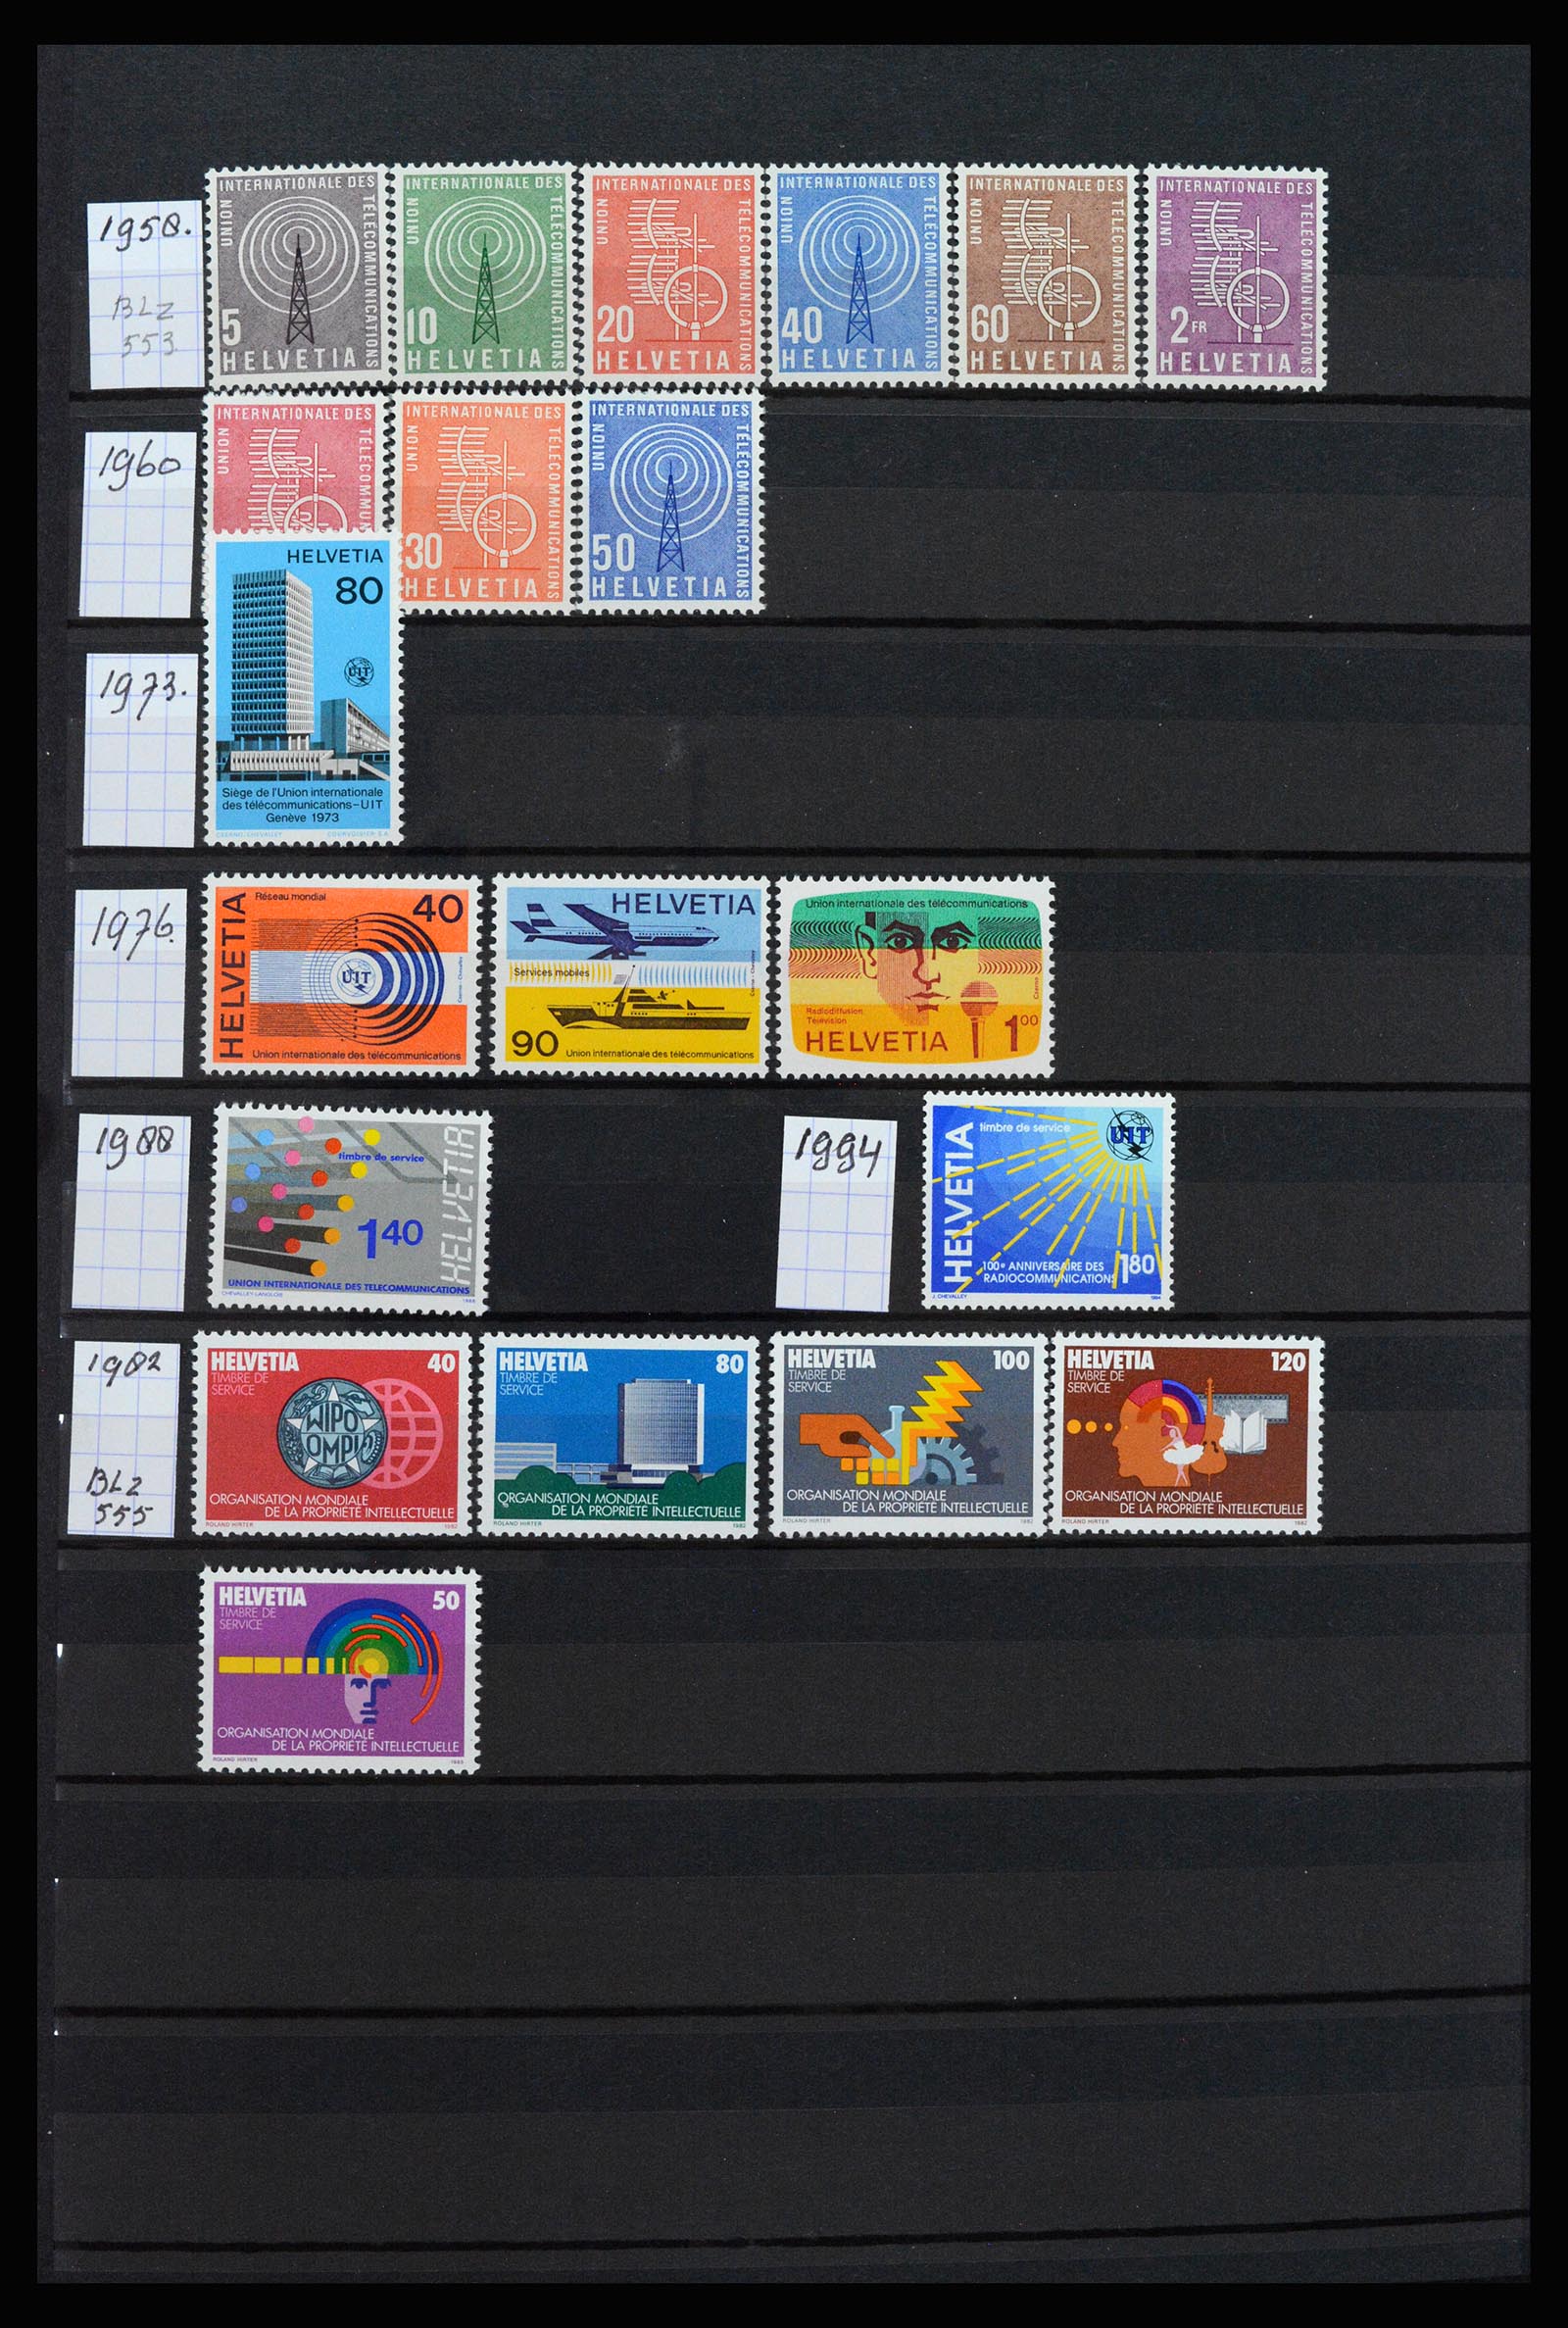 37225 164 - Stamp collection 37225 Switzerland 1854-2020.